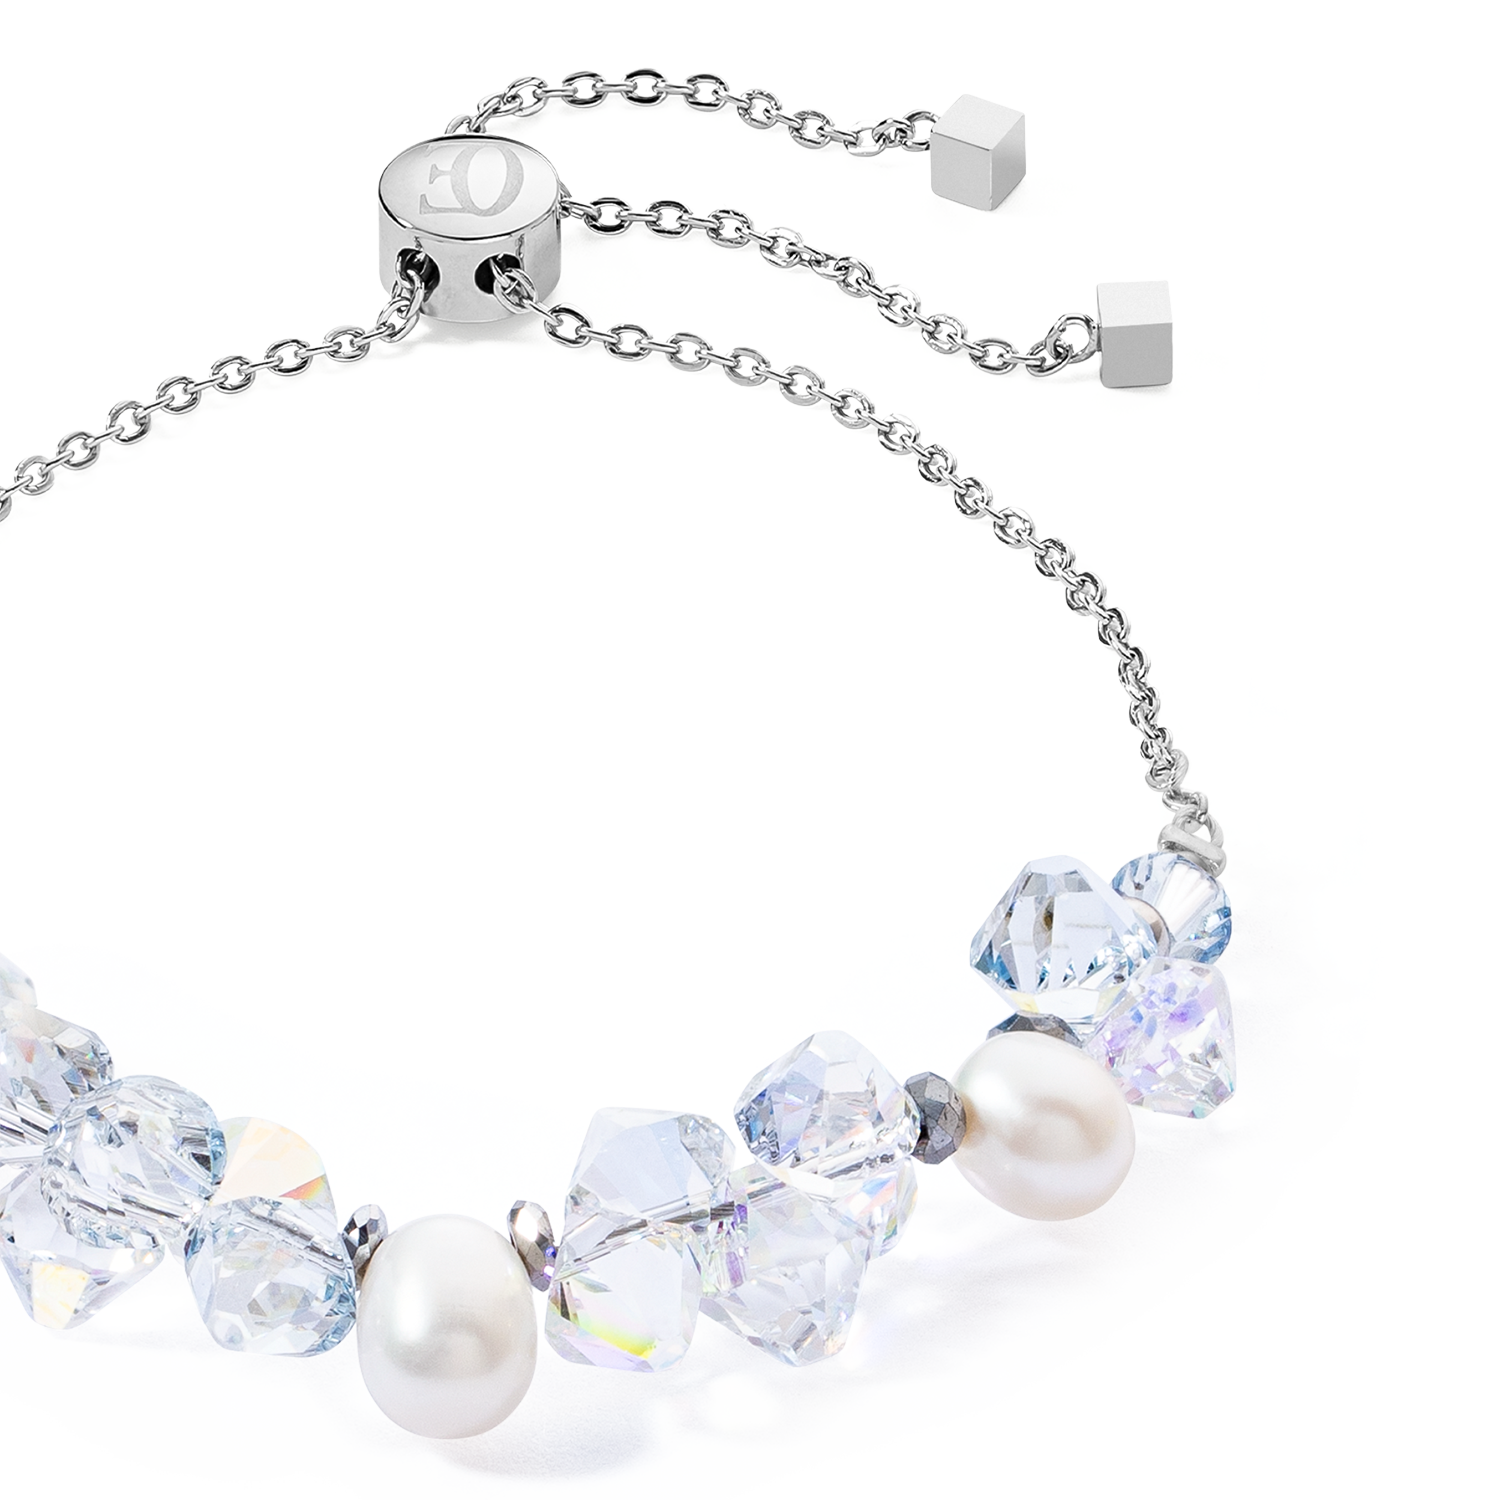 Bracciale Dancing Crystals e Pearls argento